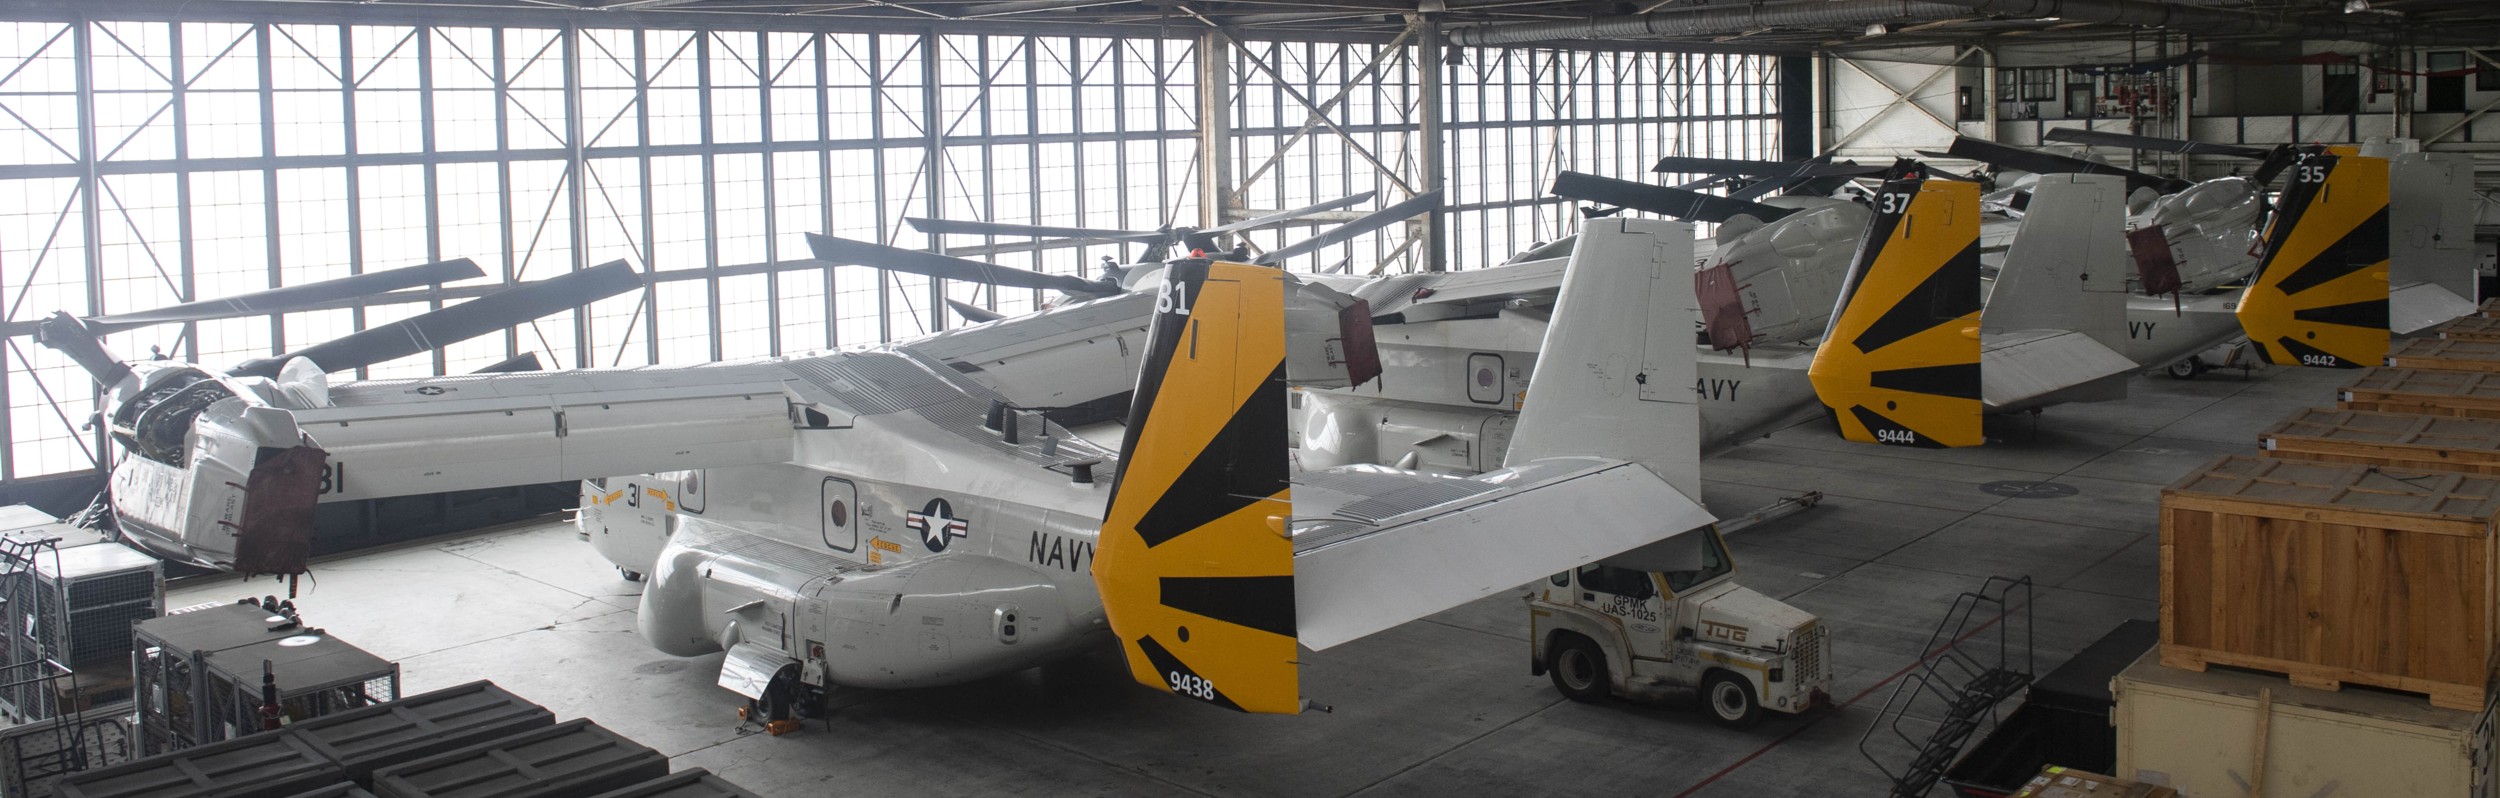 vrm-30 titans fleet logistics multi mission squadron us navy cmv-22b osprey nas north island california 105